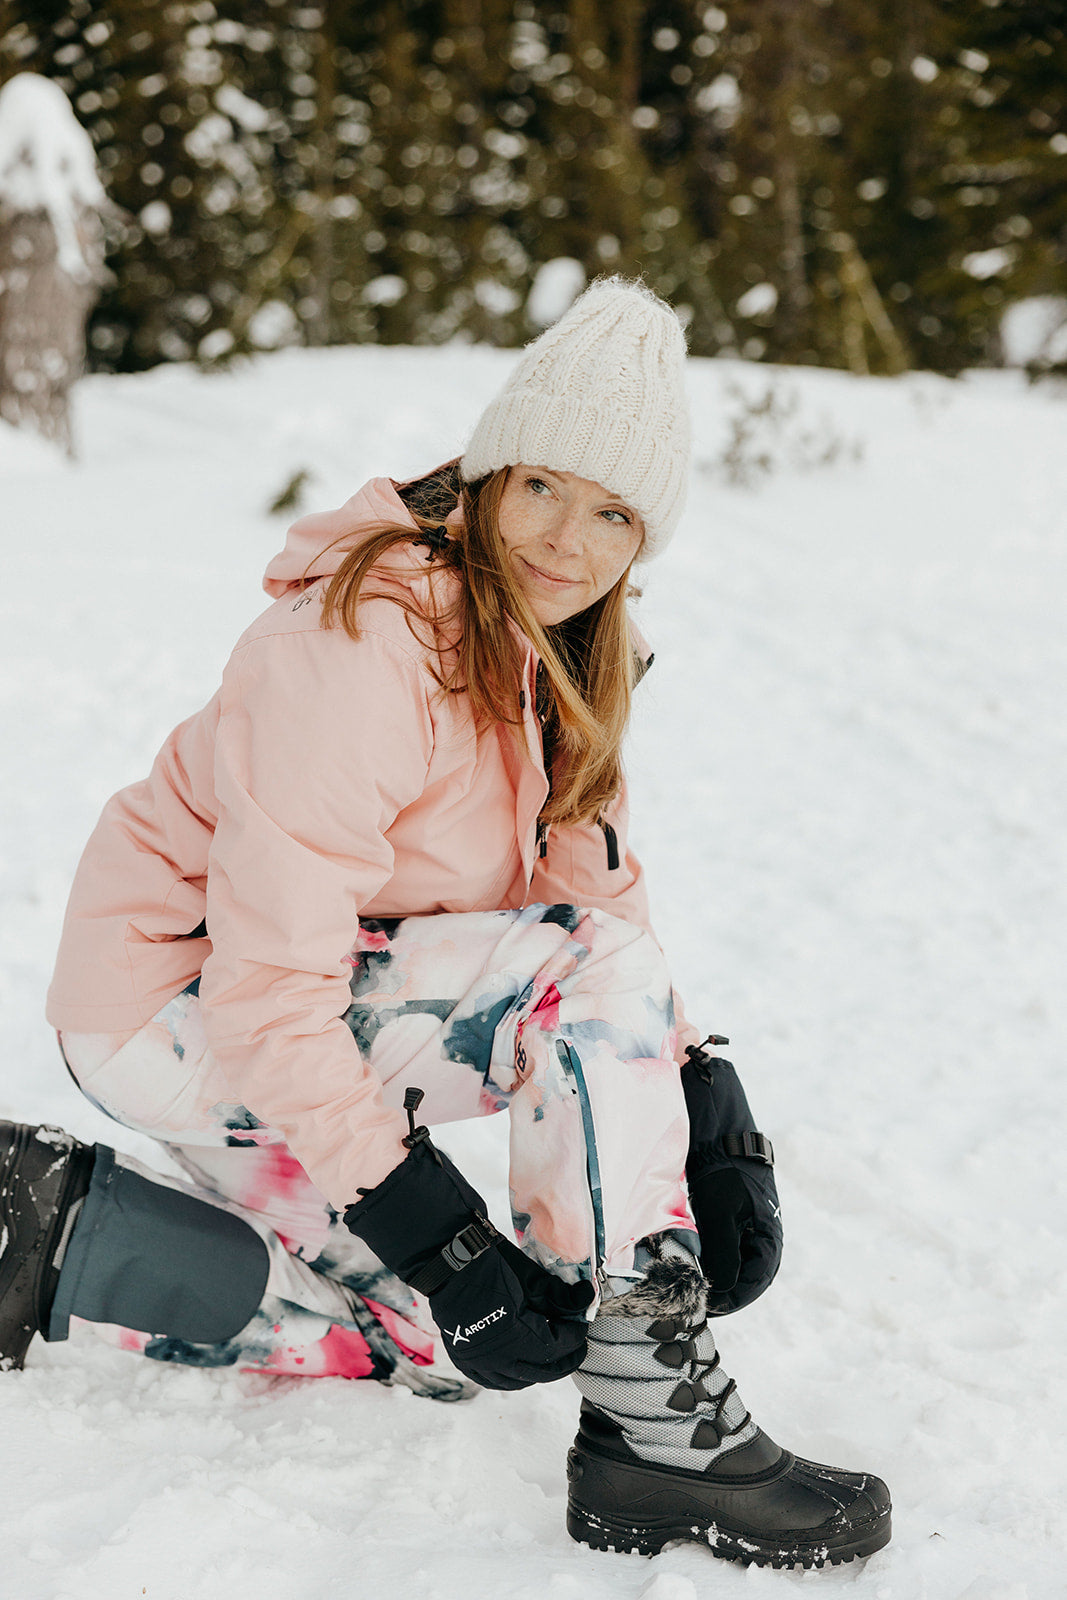 Arctix - High Quality Winter Clothing, Snow Wear for Kids, Men, Women